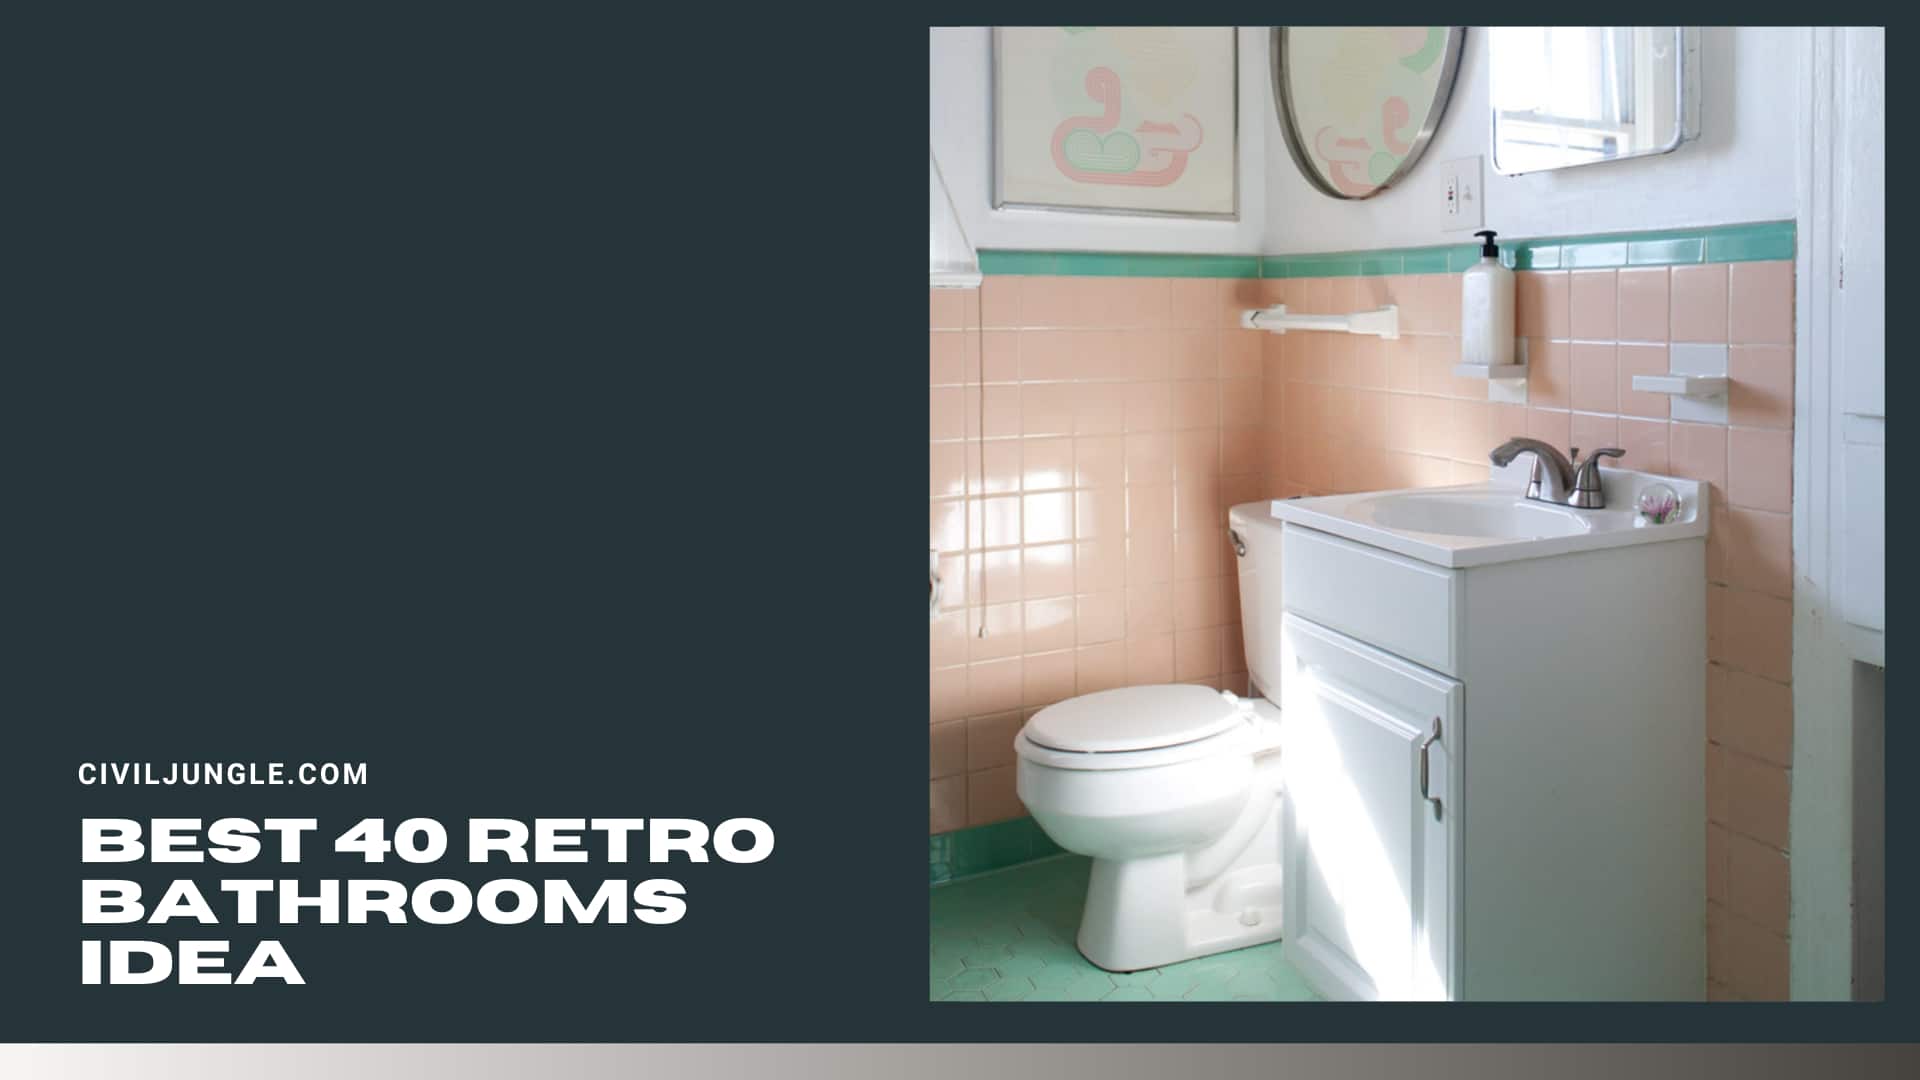 Best 40 Vintage Bathroom Idea With Retro Decor